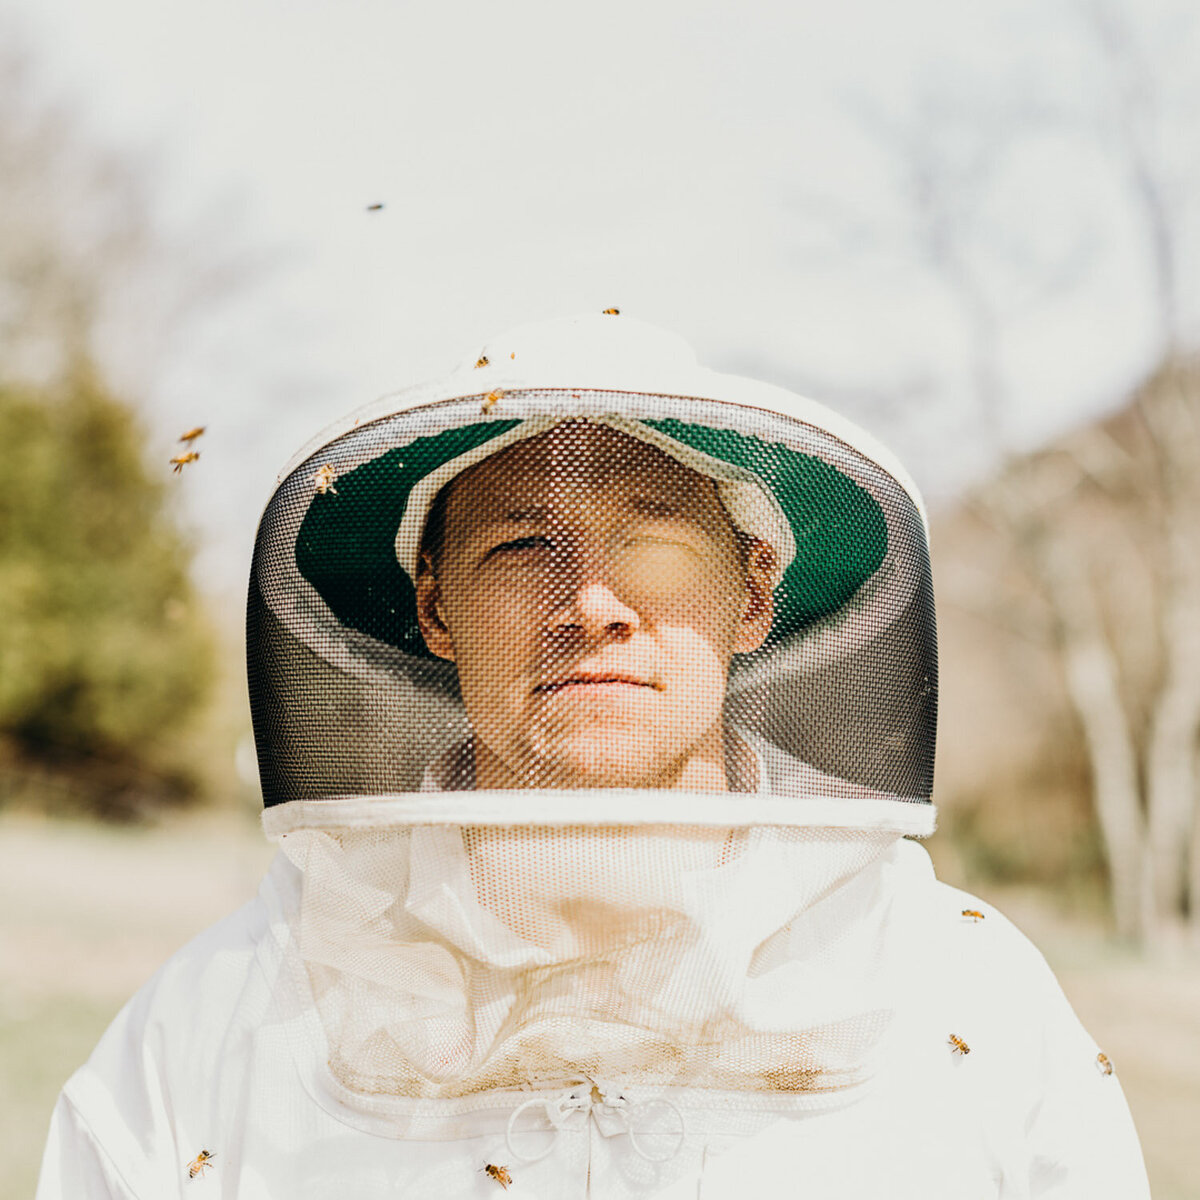 nashville-portrait-photographer-beekeeper